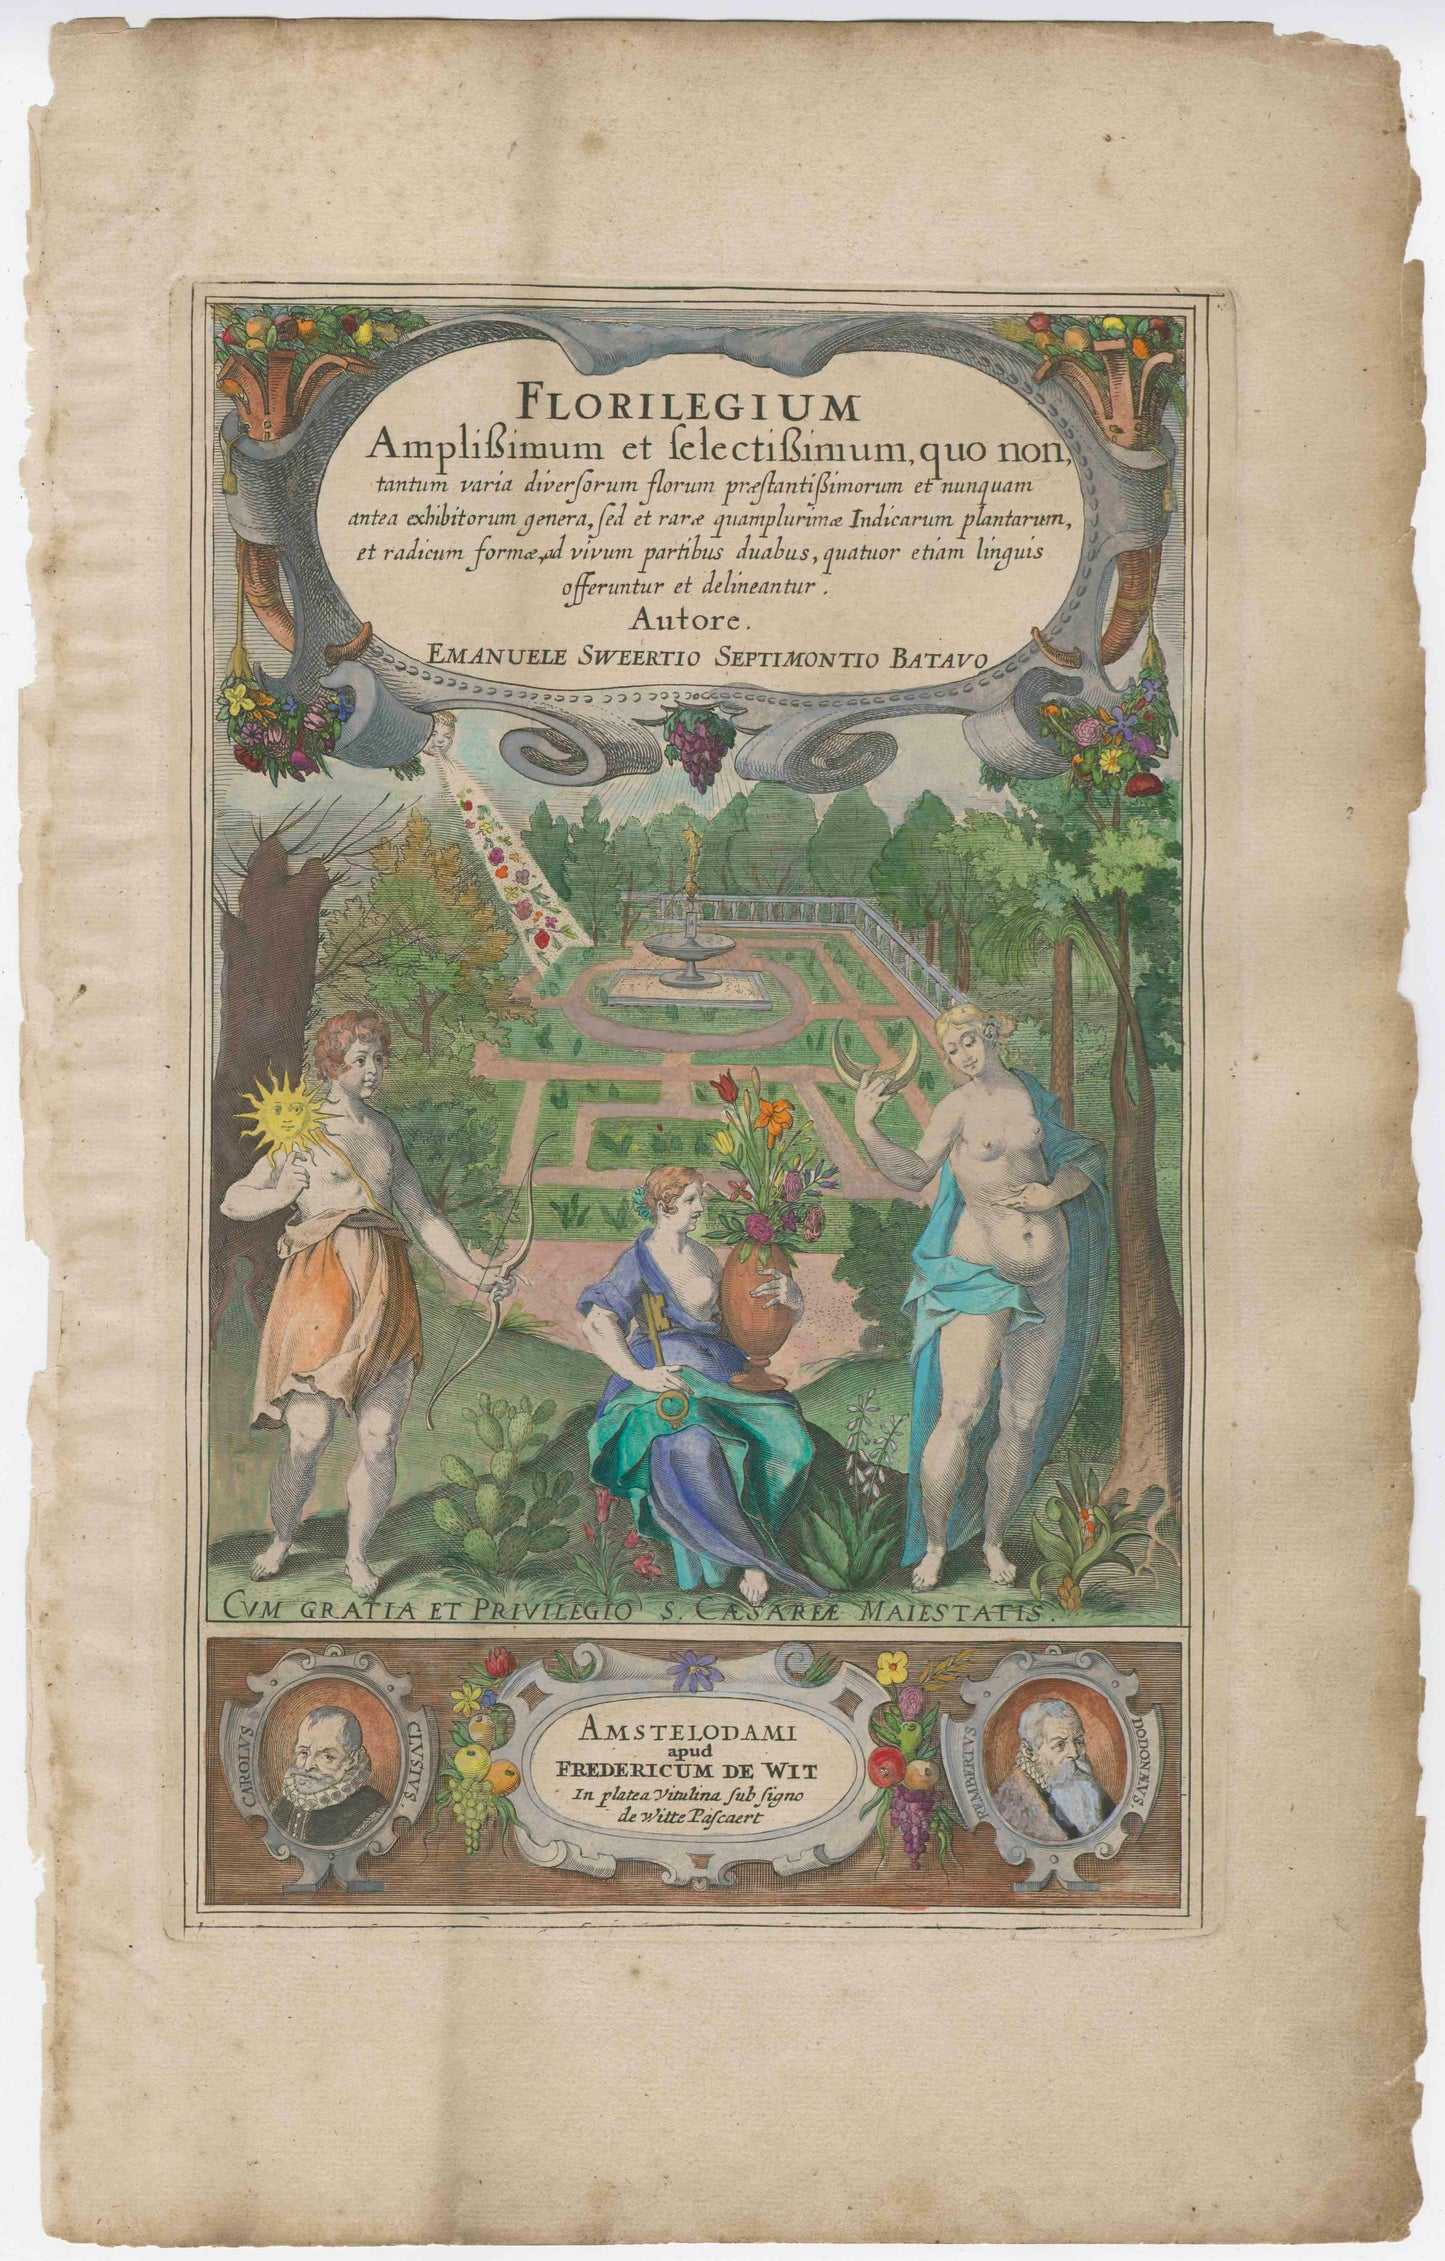 Emanuele Sweerts 17th Century "Florilegium" Print - Plate 41